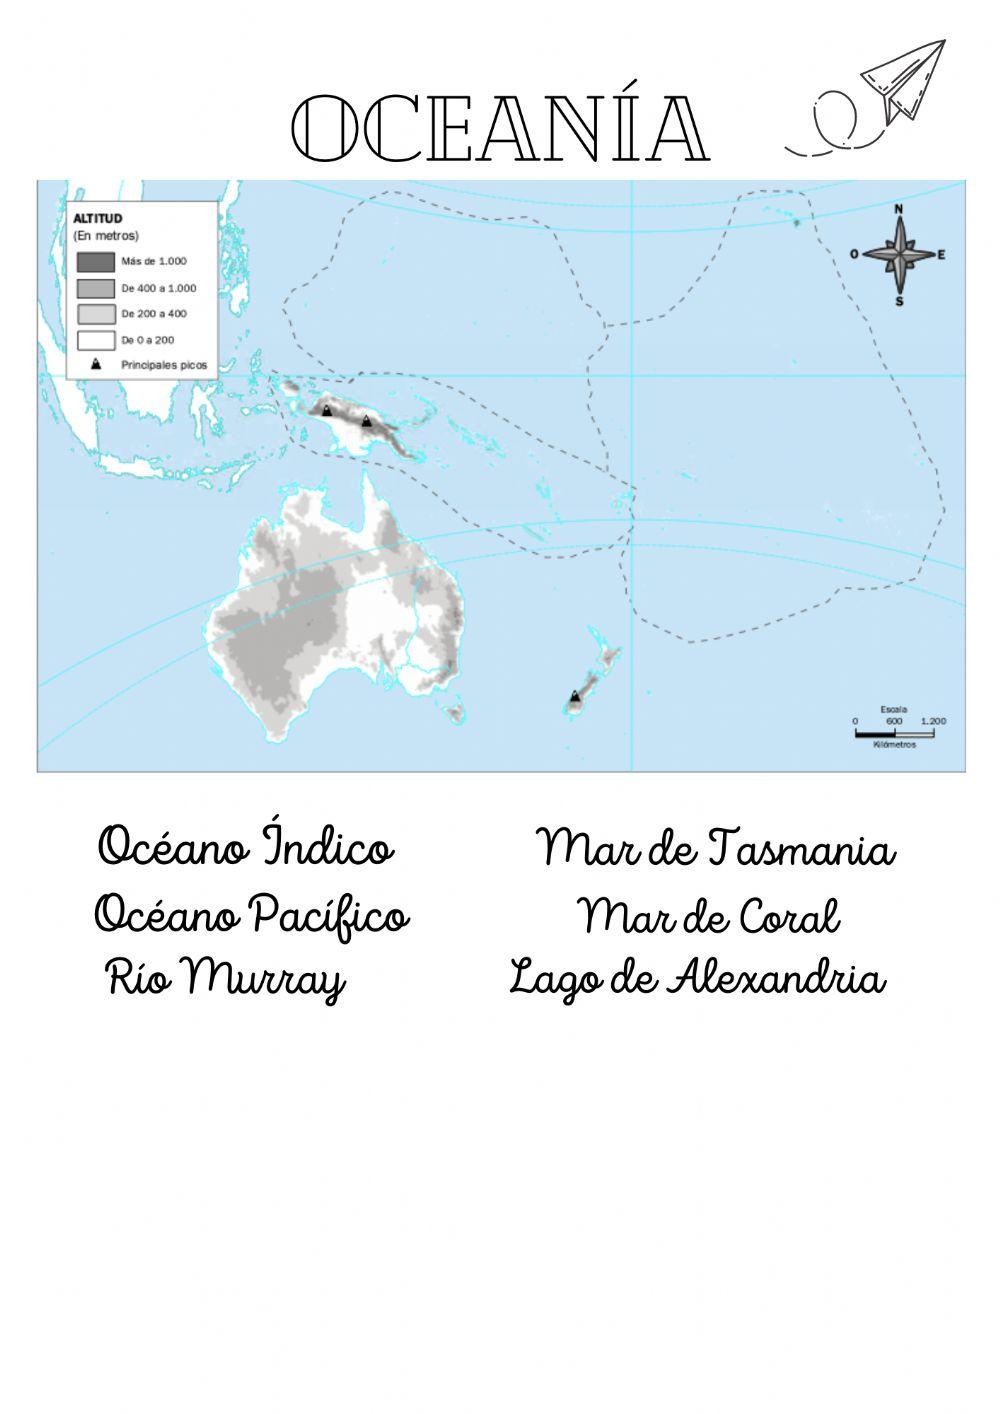 Oceania. Mapa mudo fisico aguas